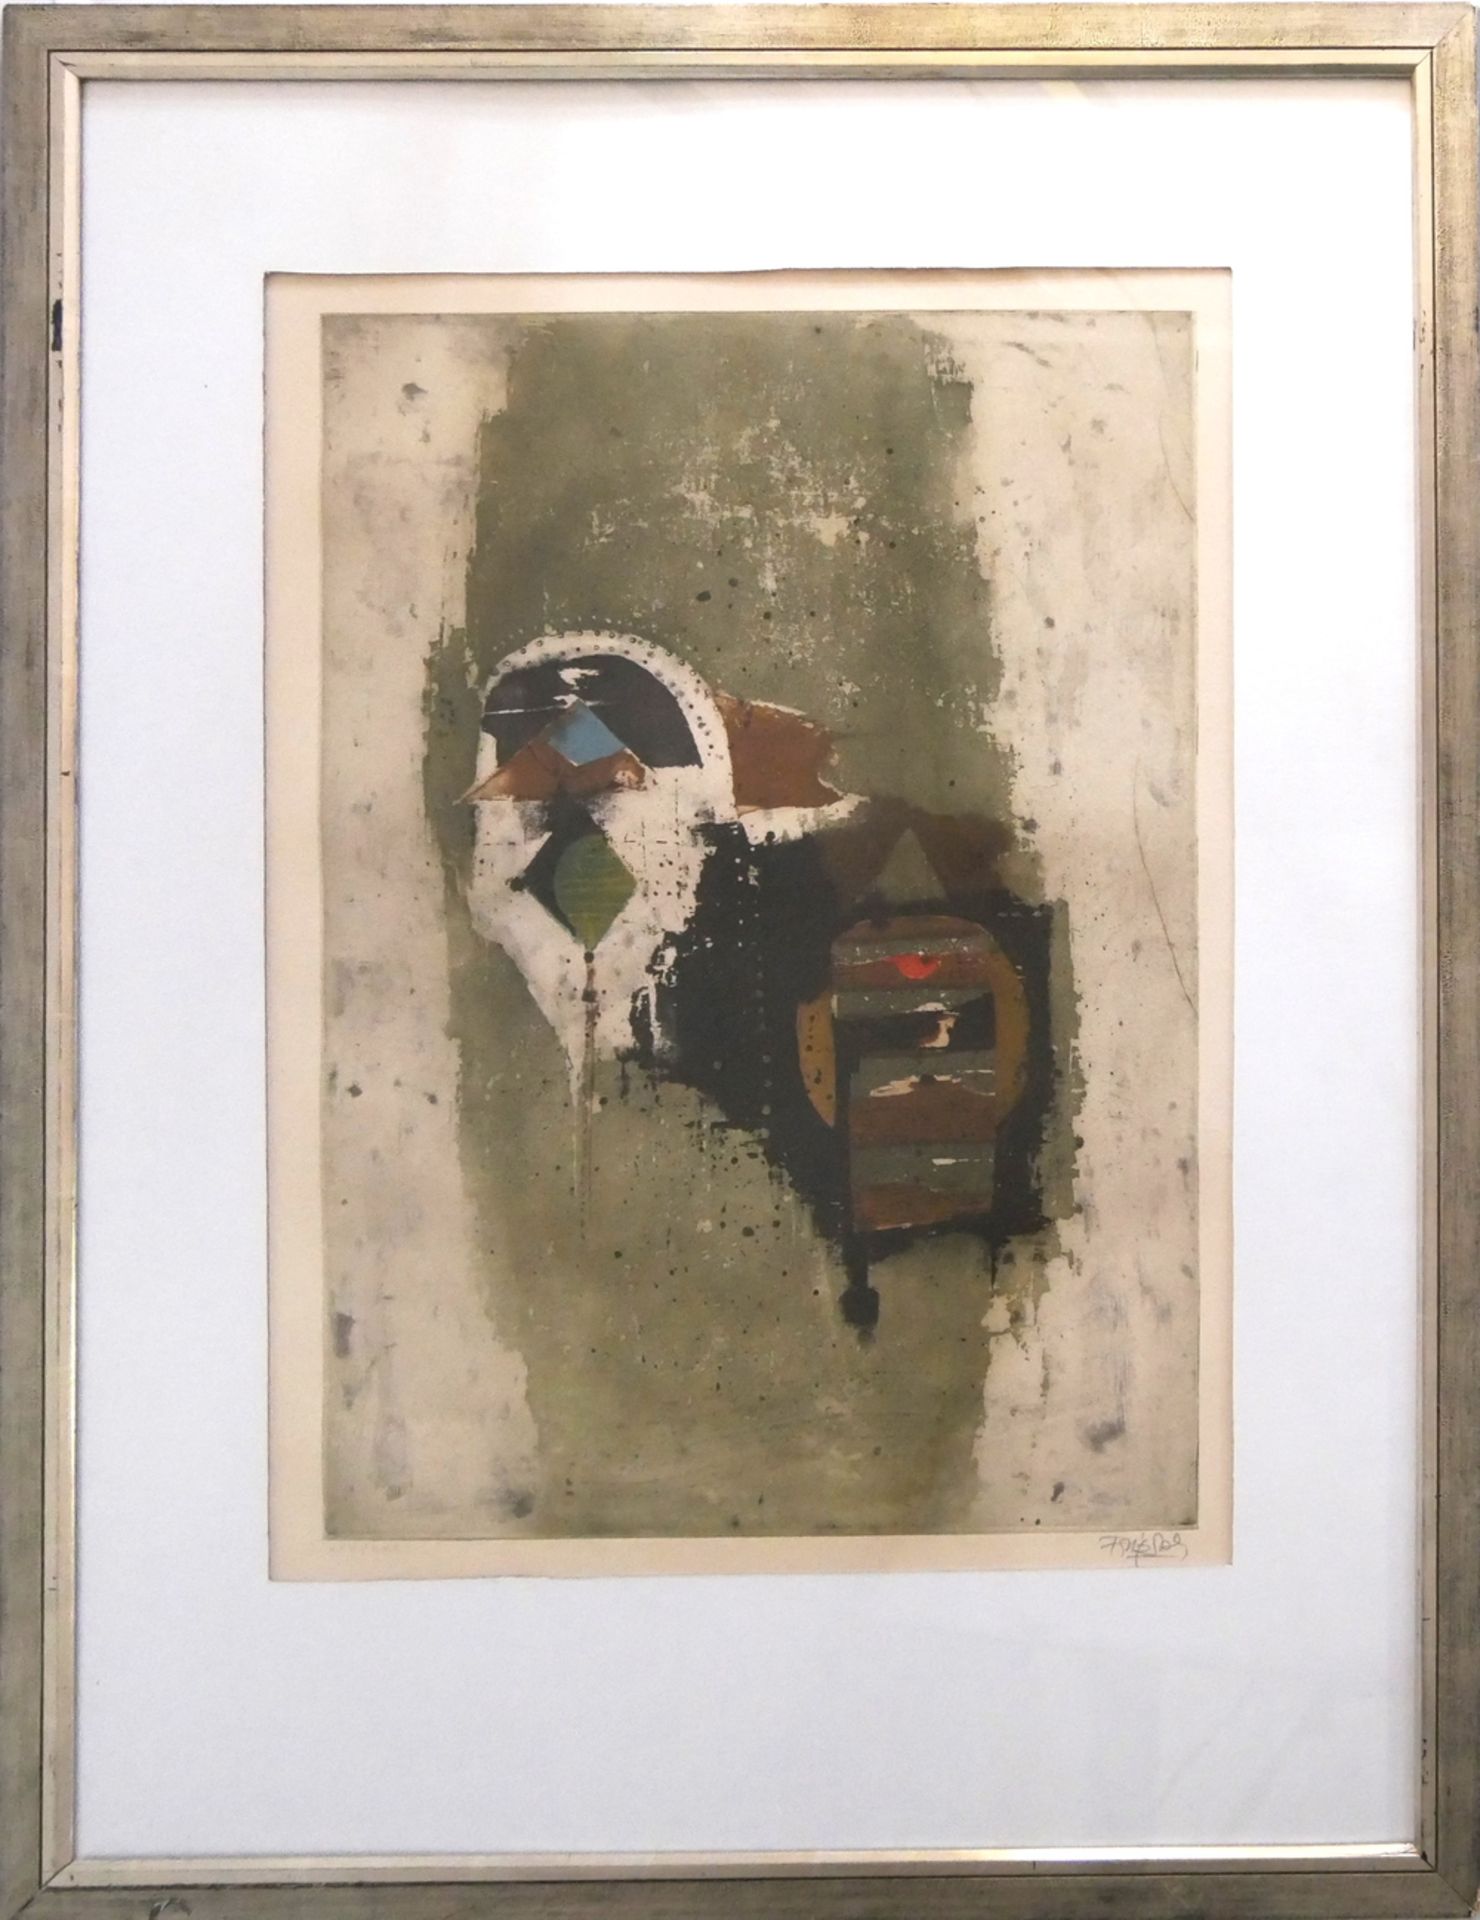 Johnny FRIEDLAENDER (1912-1992). Farbradierung "Farbabstraktion" hinter Glas gerahmt. Rechts unten